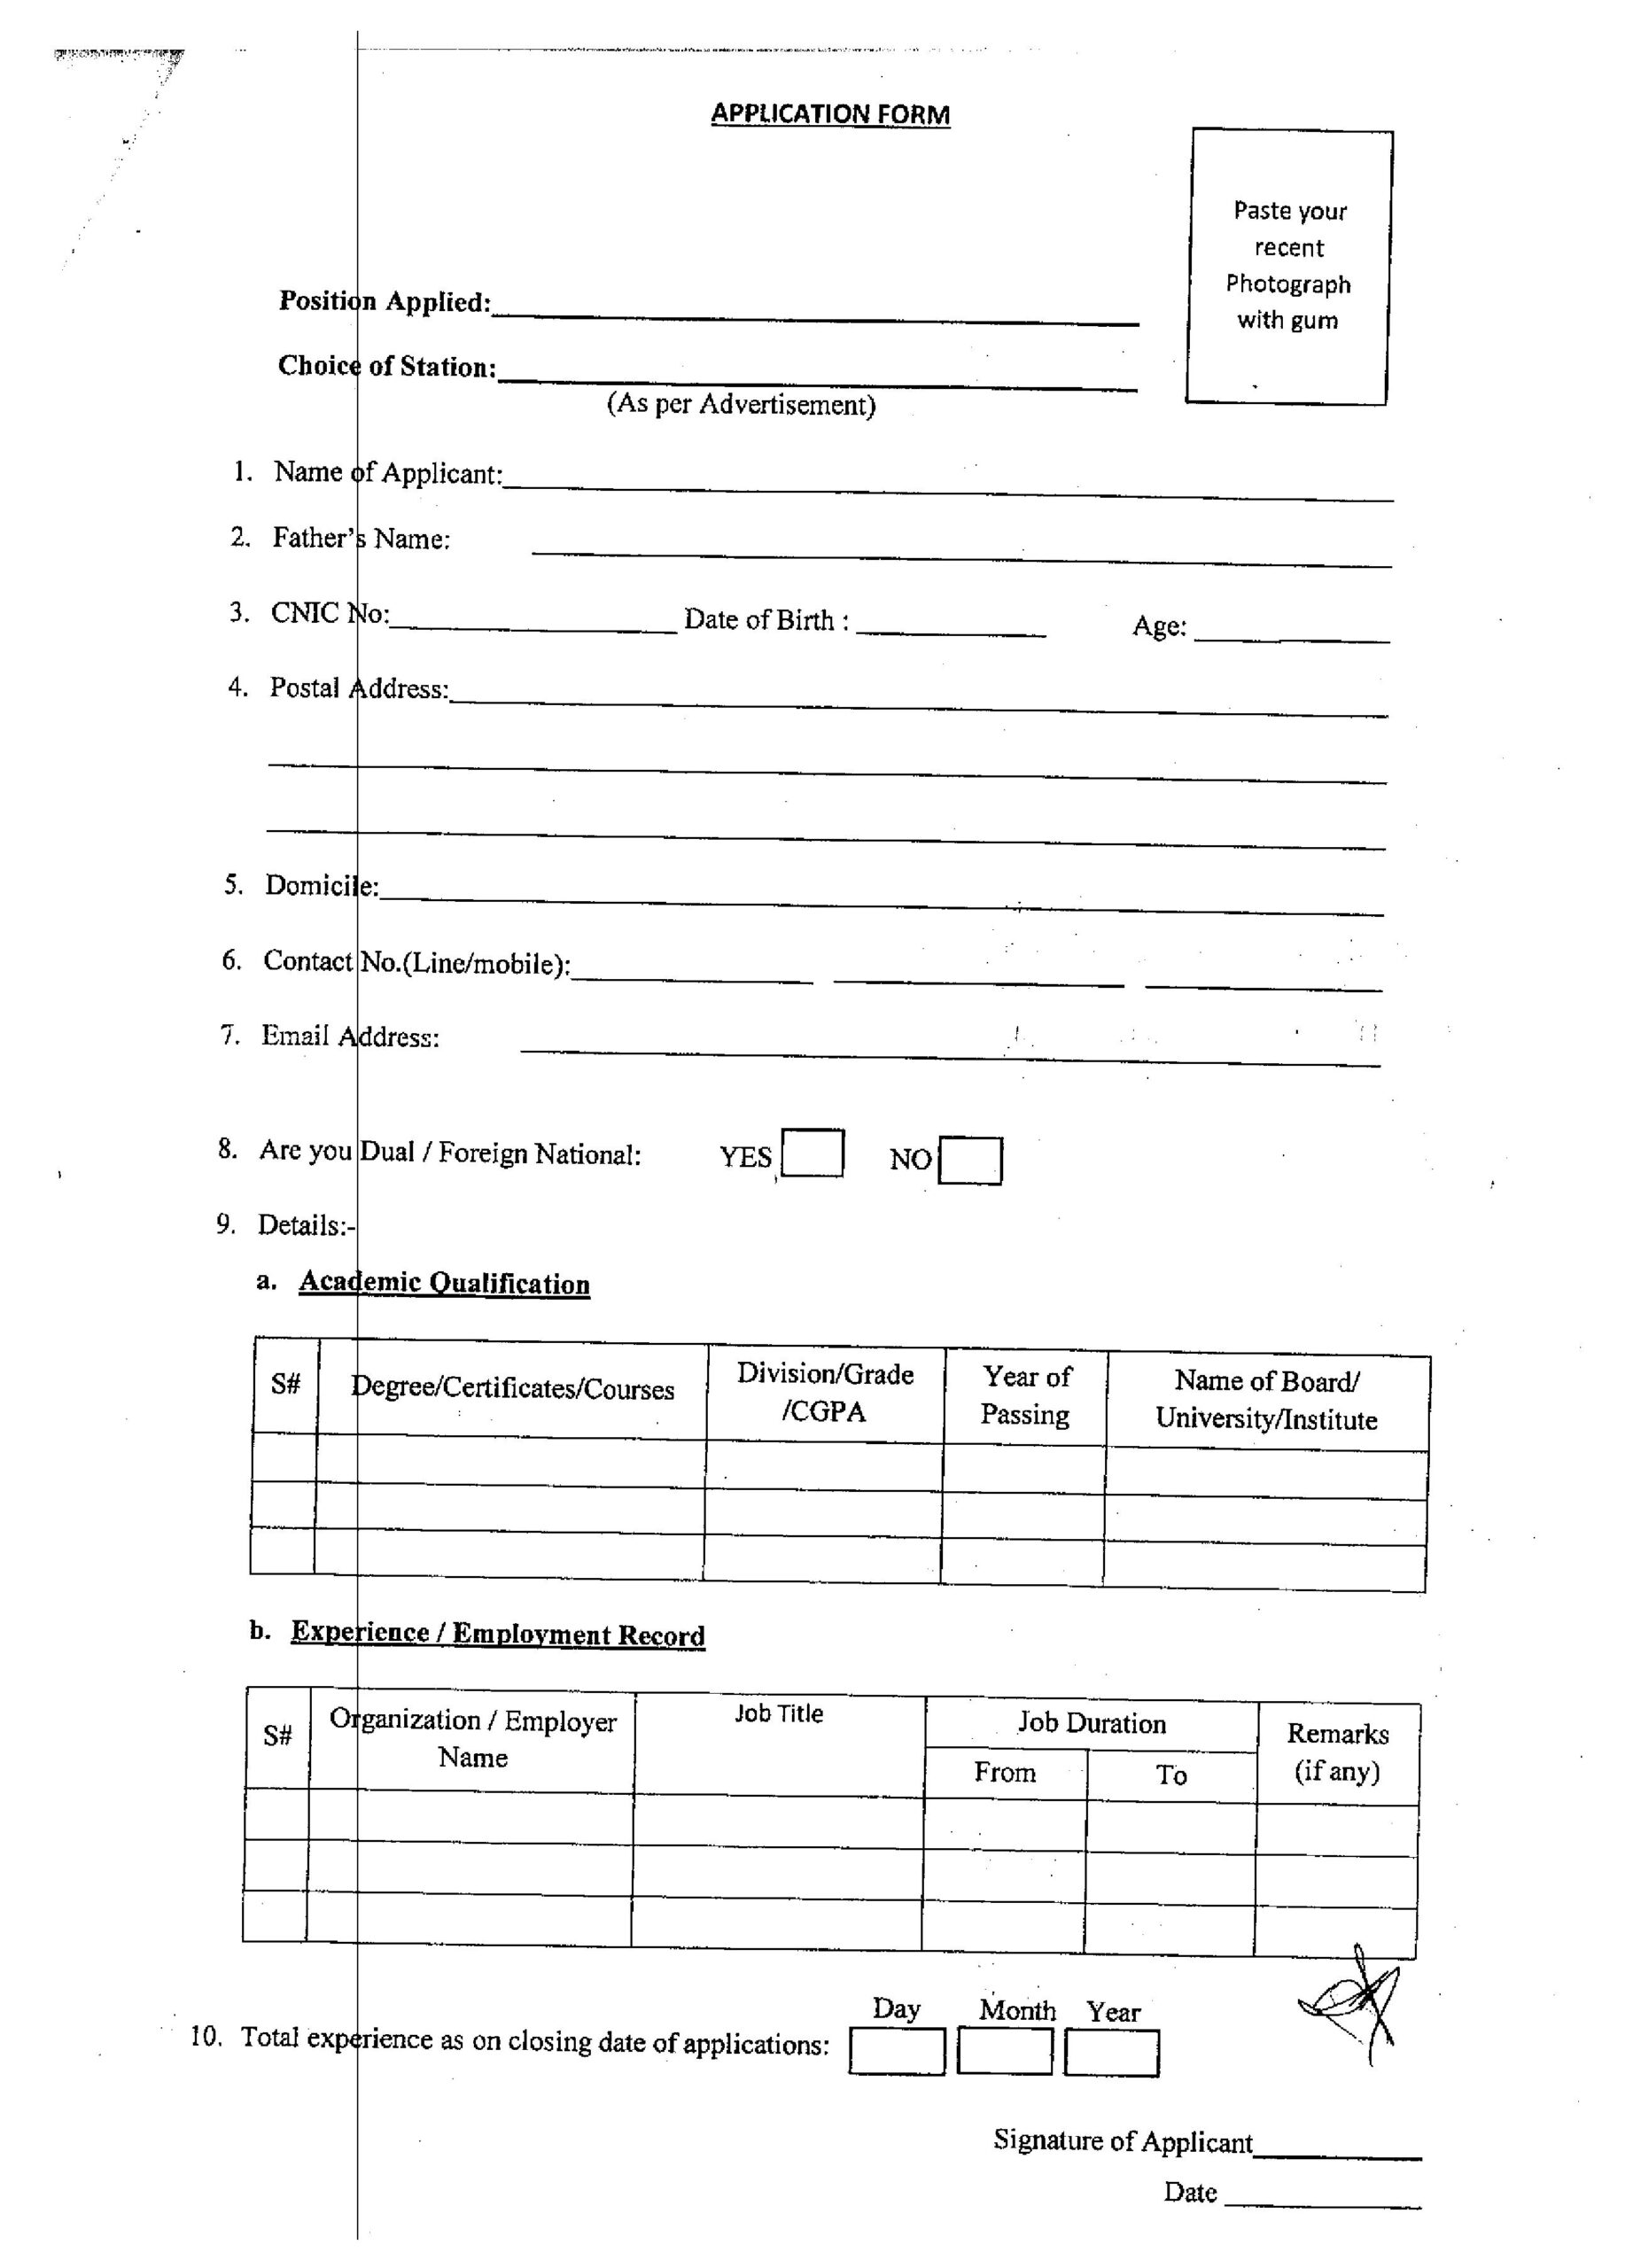 NAB Application Form